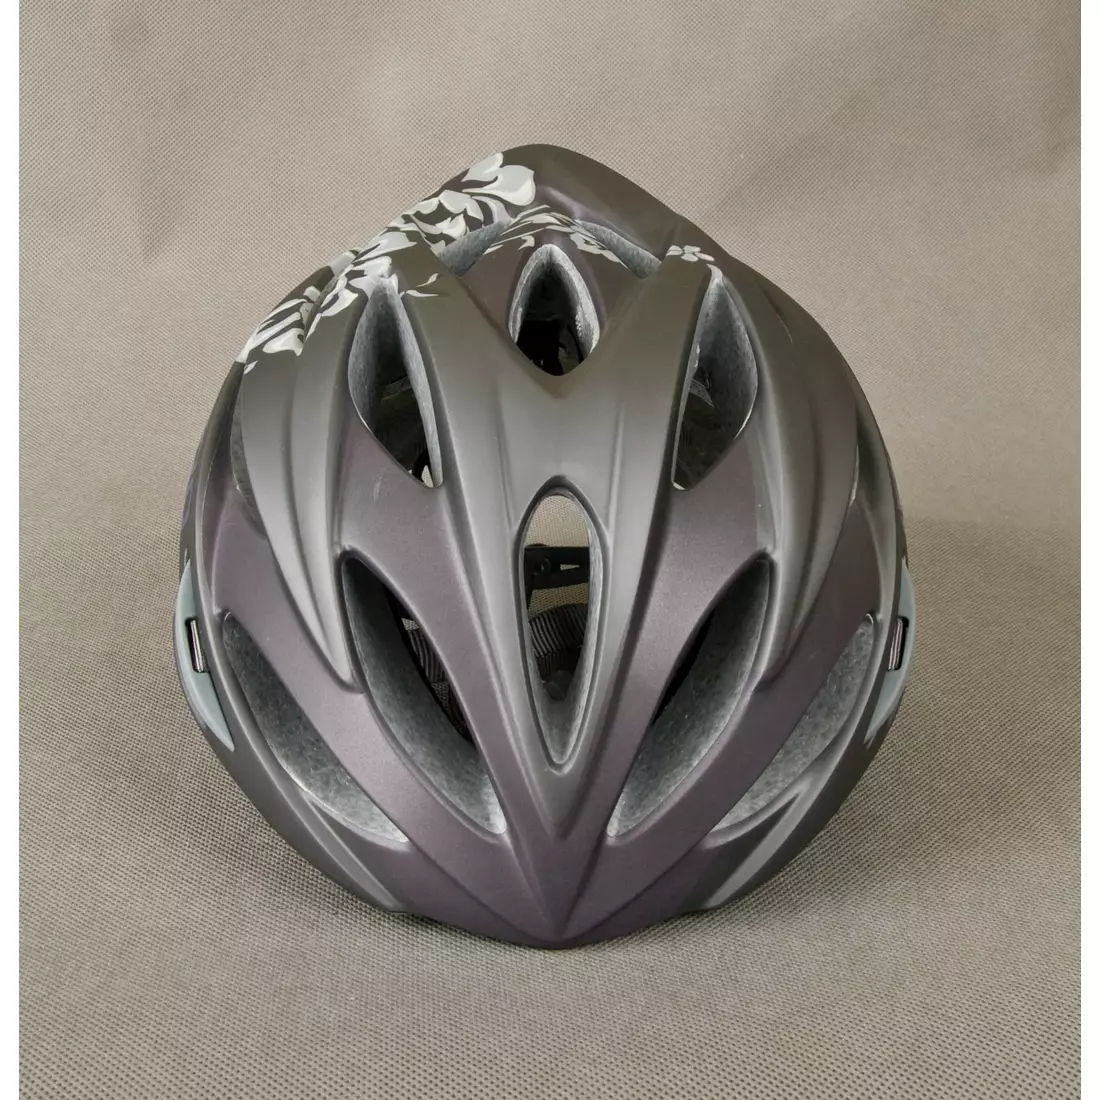 GIRO damski kask rowerowy SONNET titanium